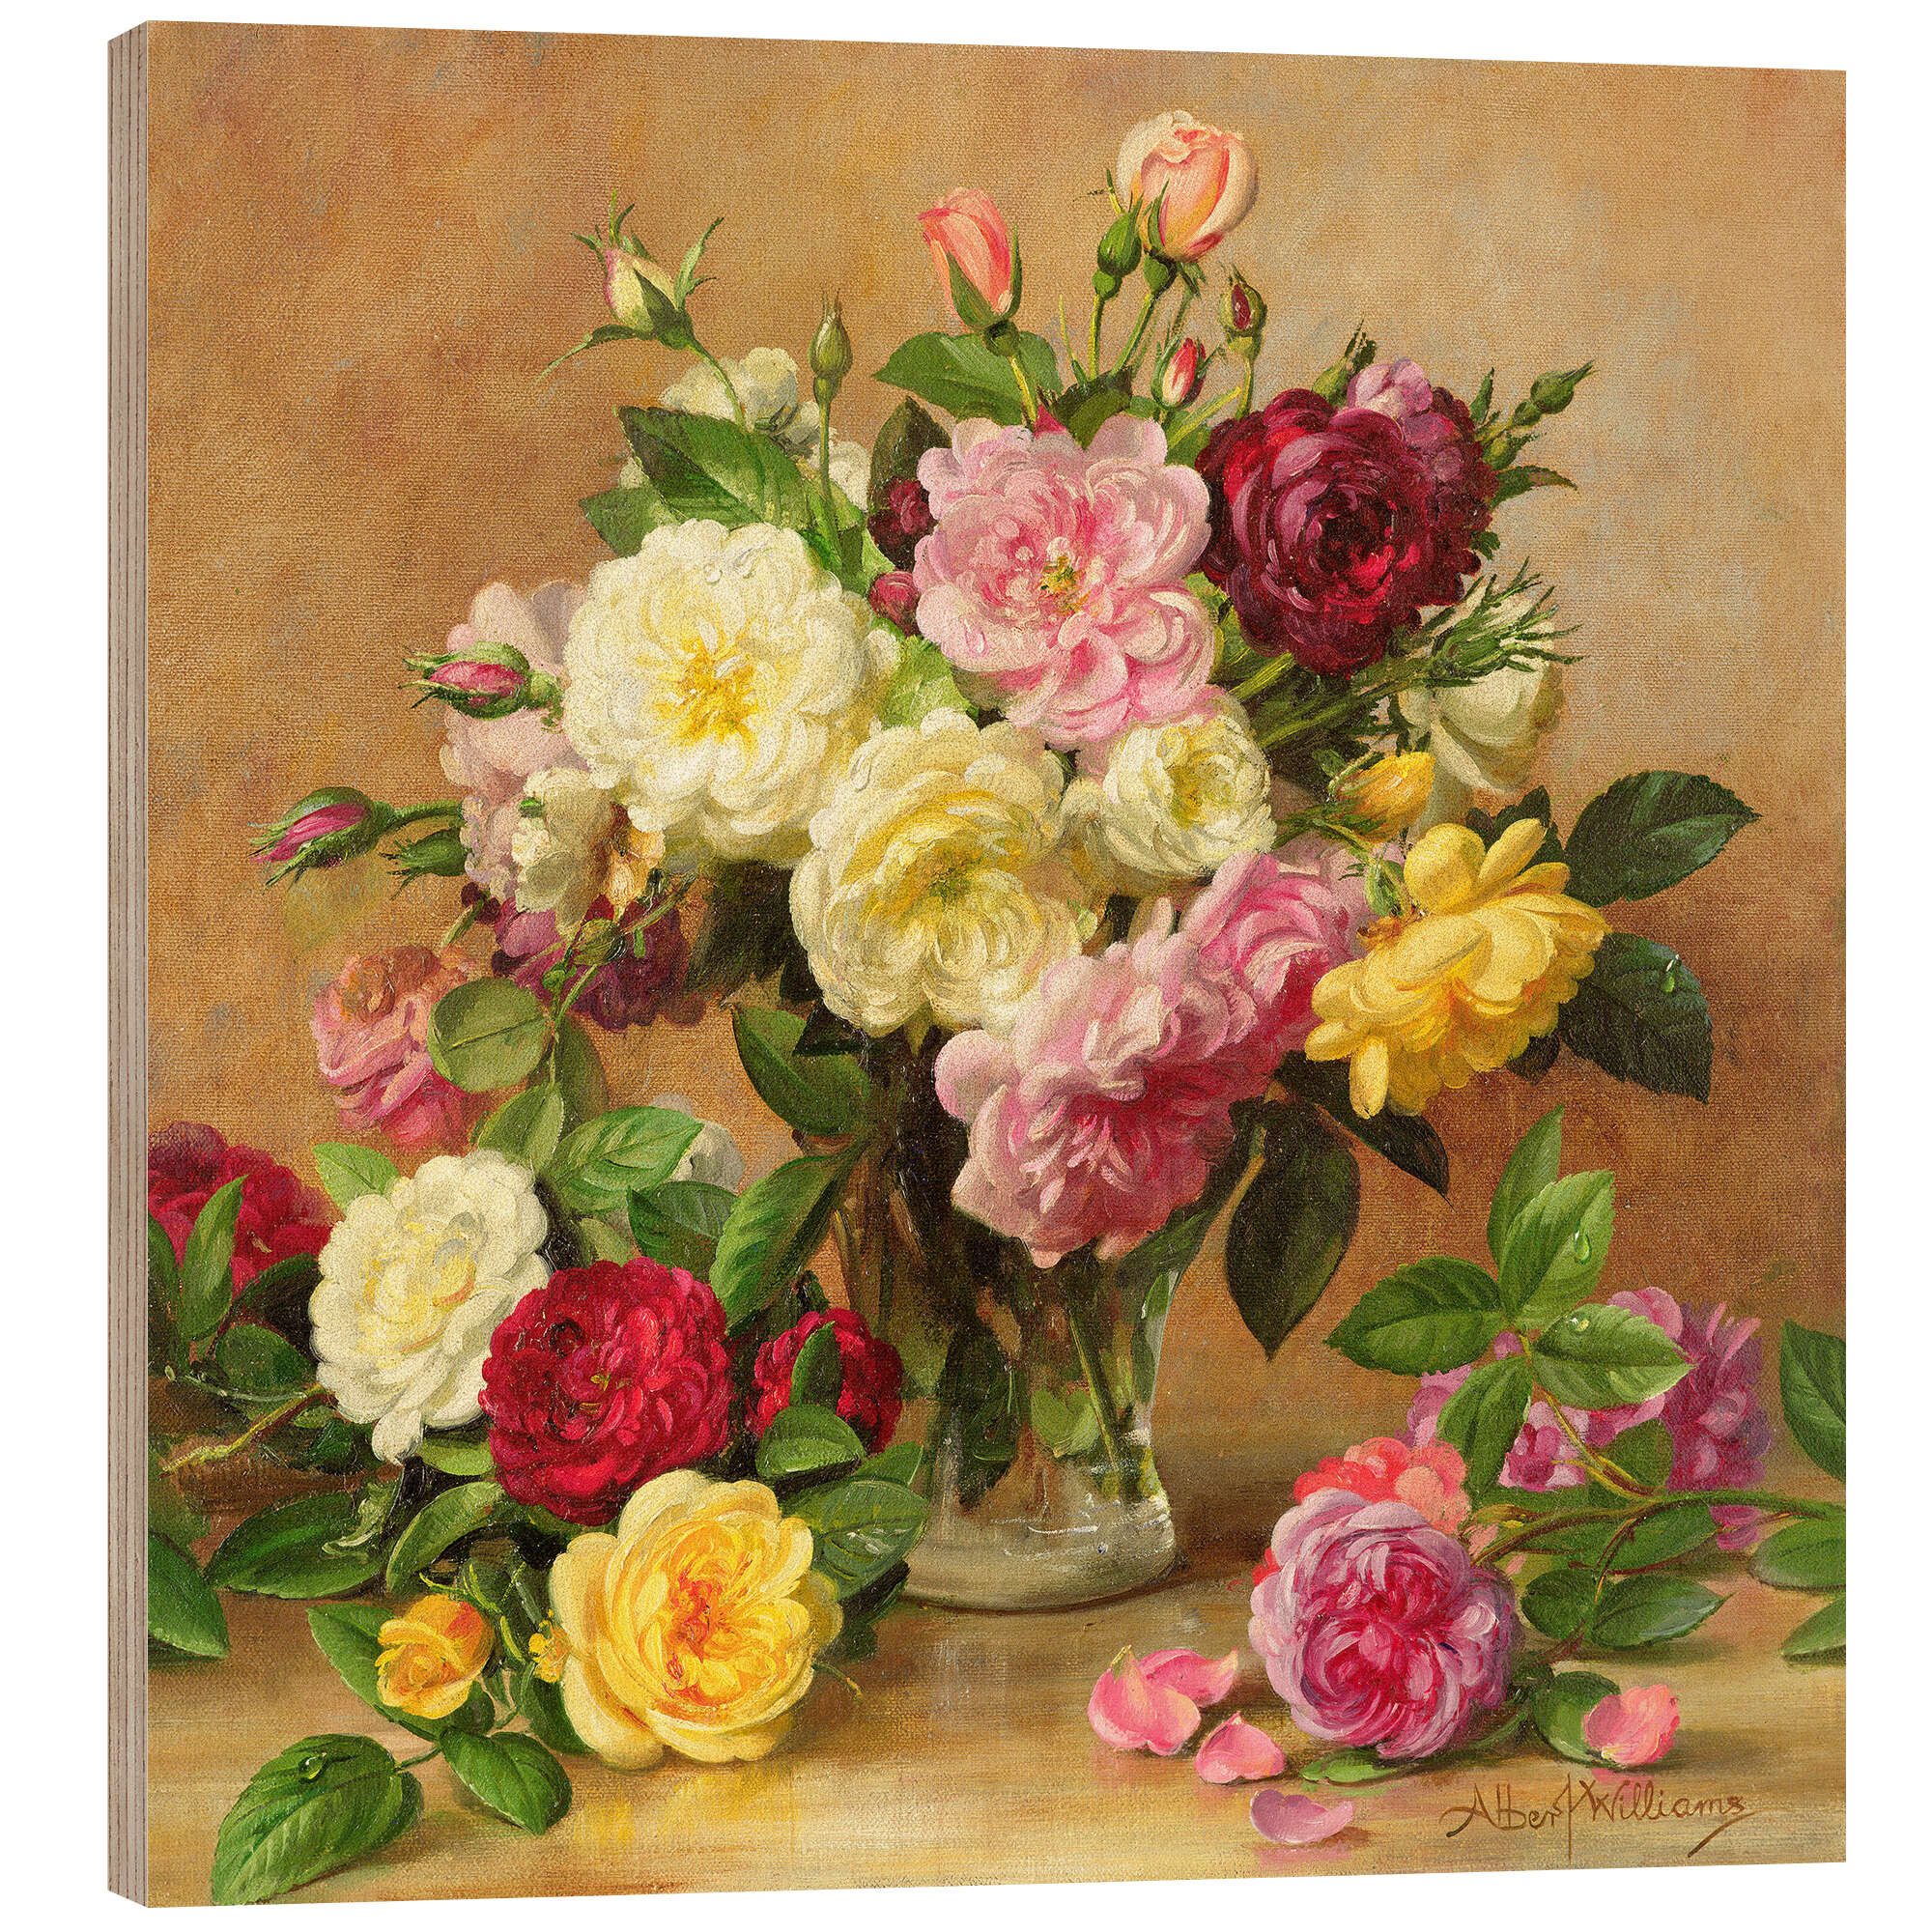 Posterlounge Holzbild Albert Williams, Altmodische viktorianische Rosen, Malerei